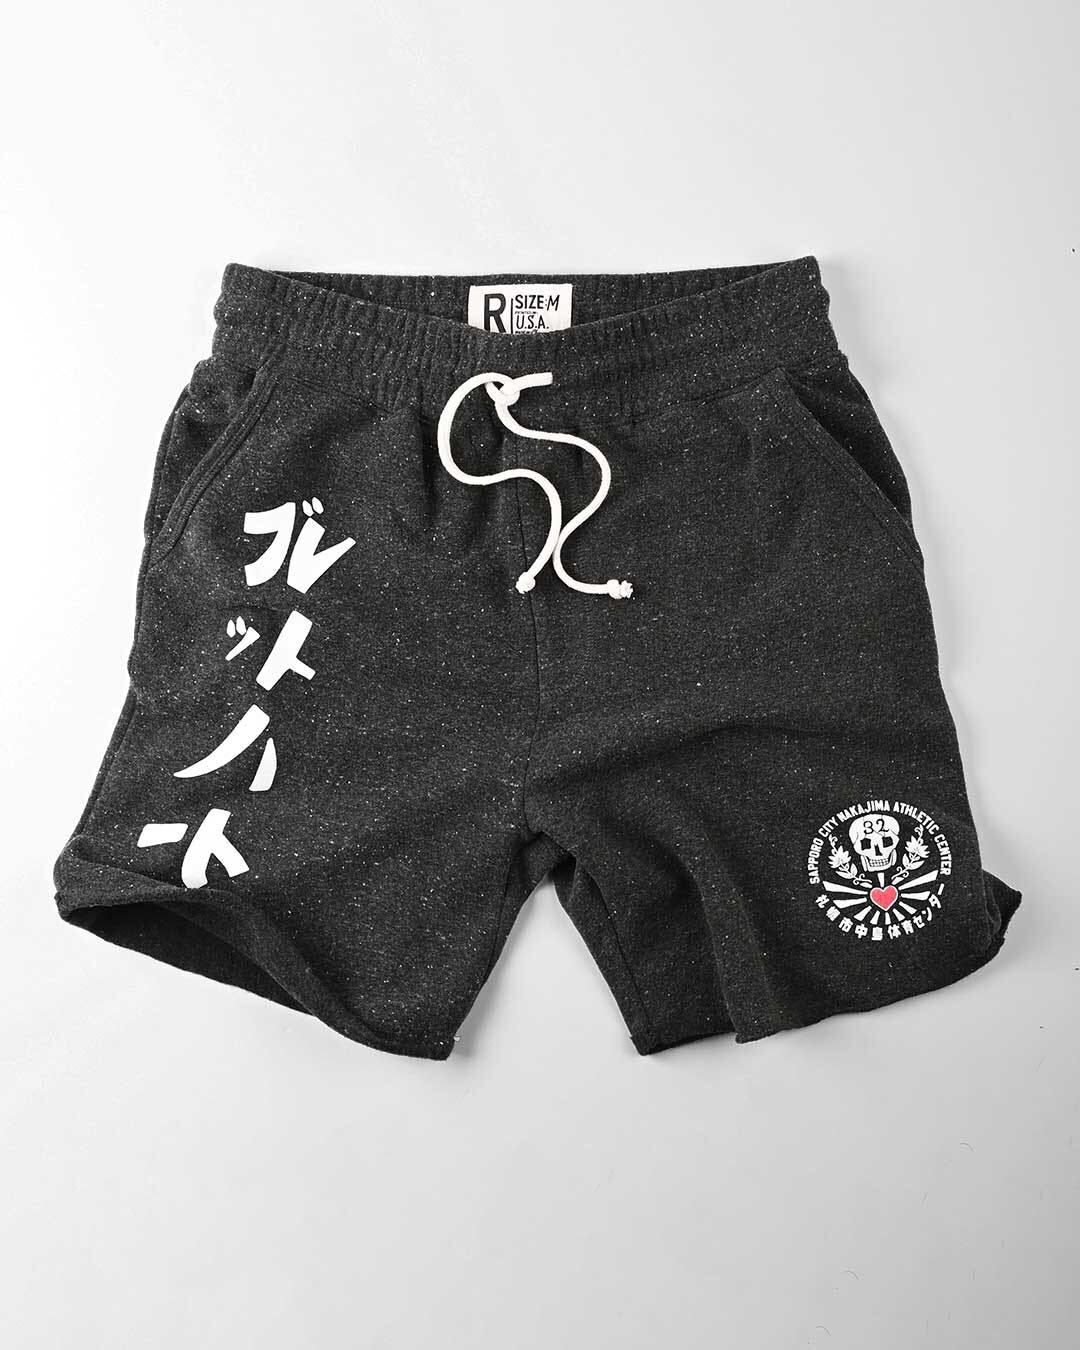 Bret Hart Japan Black Shorts - Roots of Fight